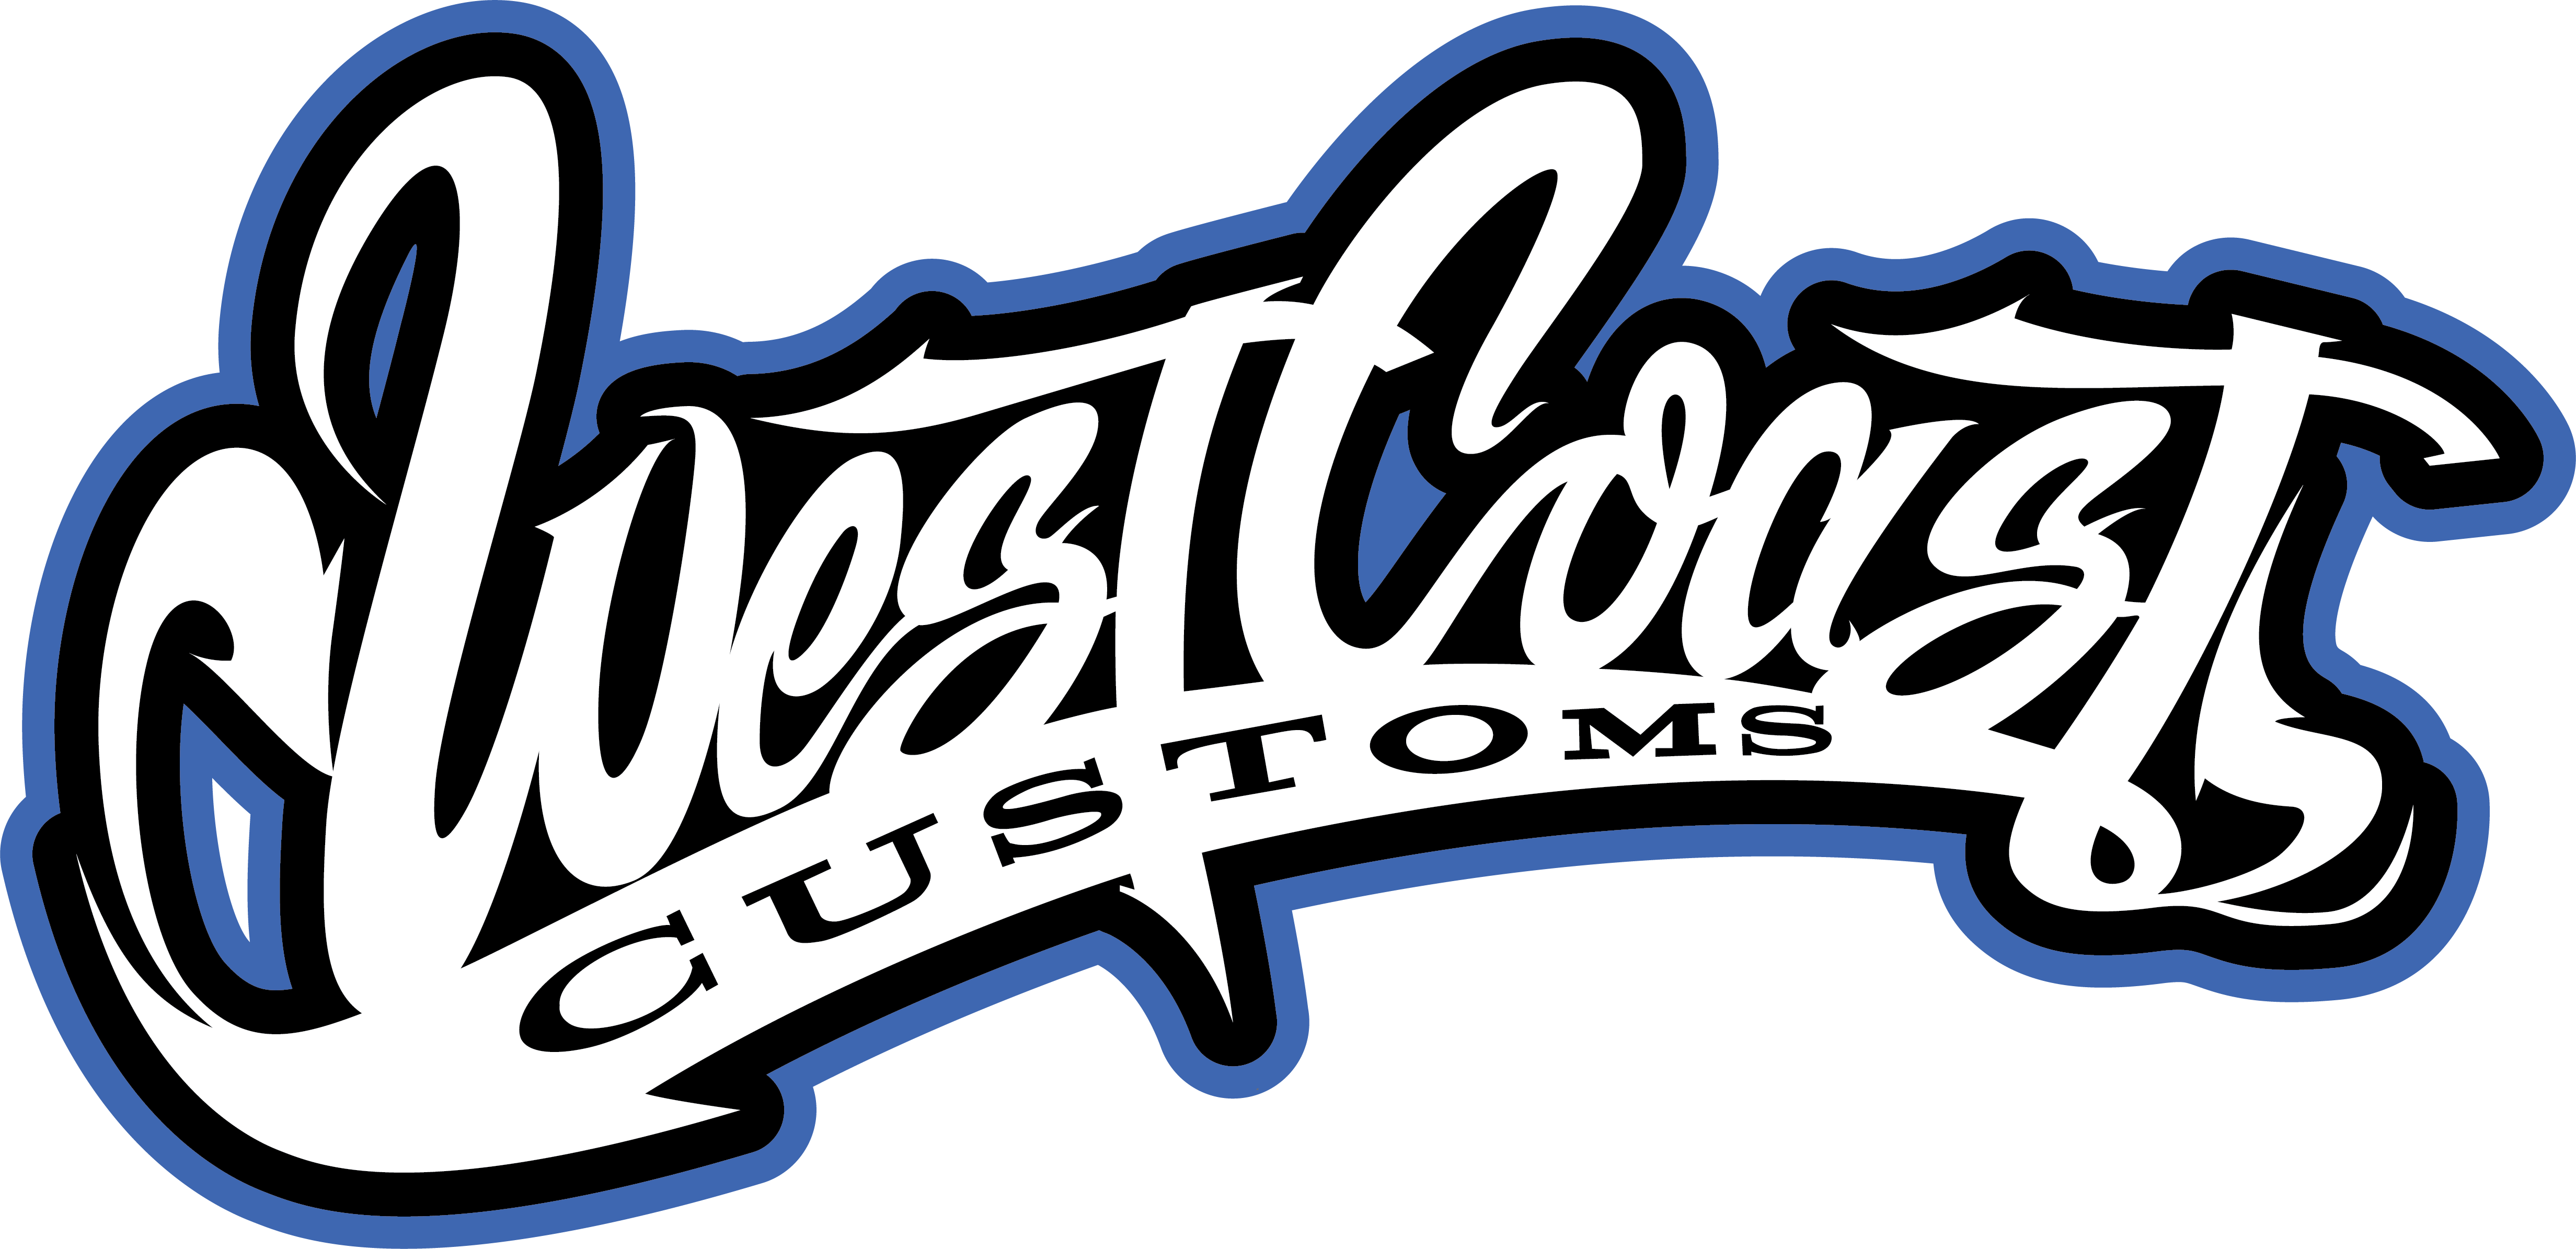 Western coast. Мастерская West Coast Customs. Кастом логотип. West Coast лого. West Coast Customs машины.